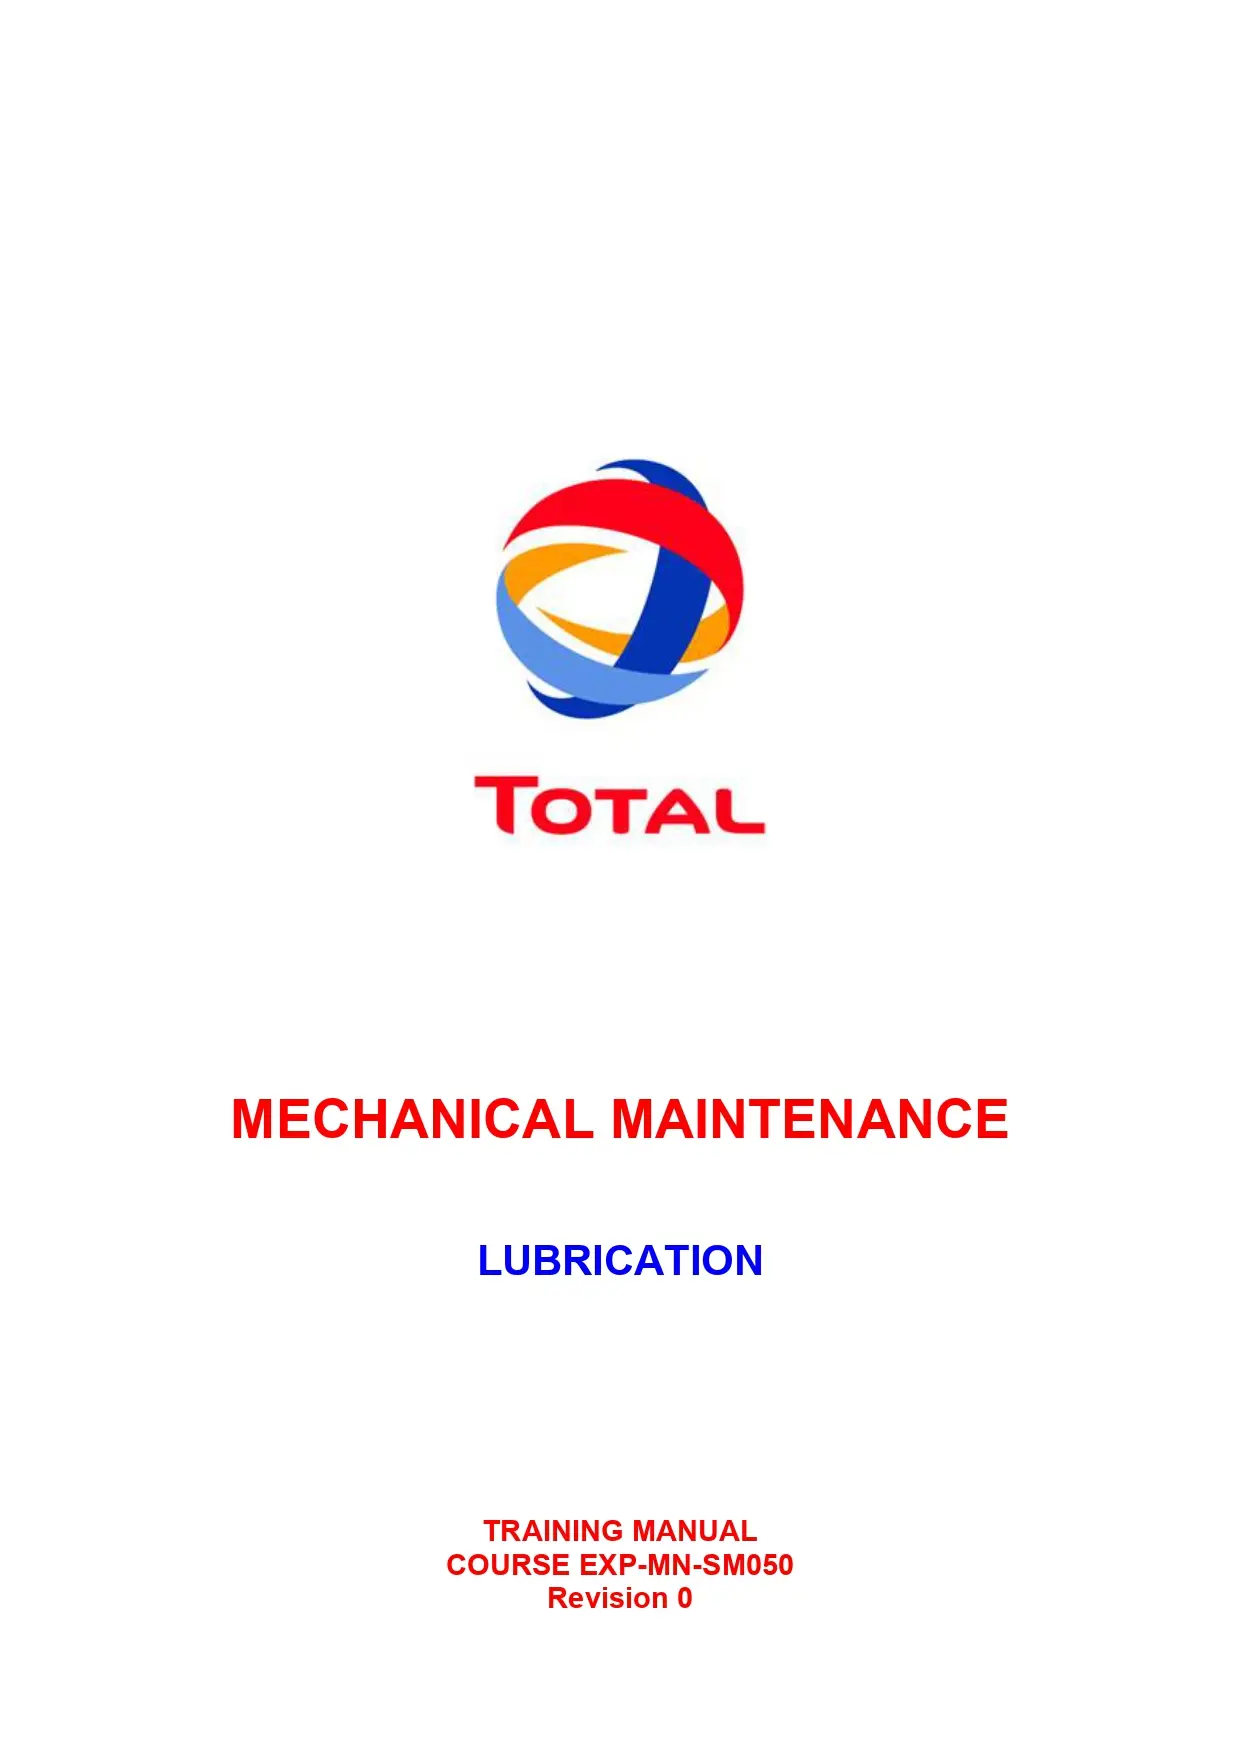 Mechanical Maintenance